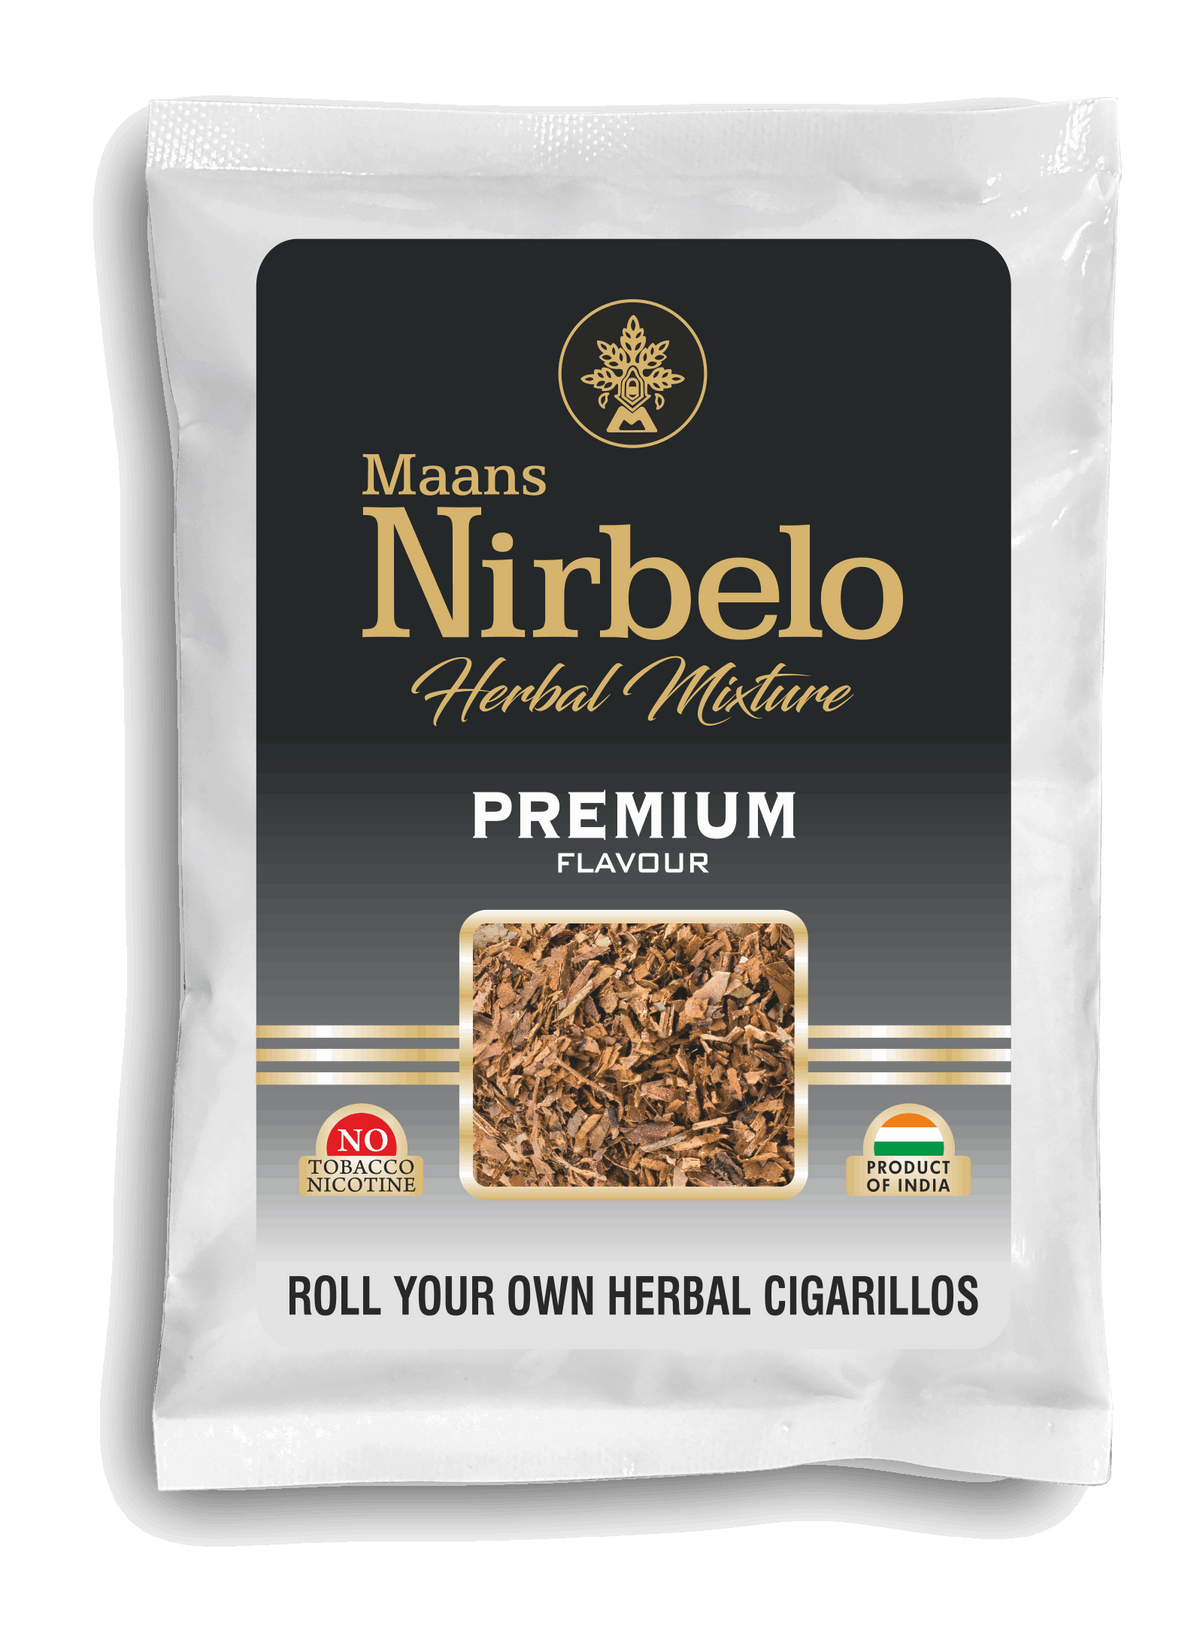 Nirbelo Herbal Raw Mixture Premium Flavor 100% Tobacco Free & Nicotine Free Natural Organic Ingredients for Quit Smoking & Nature's Alternative to Tobacco